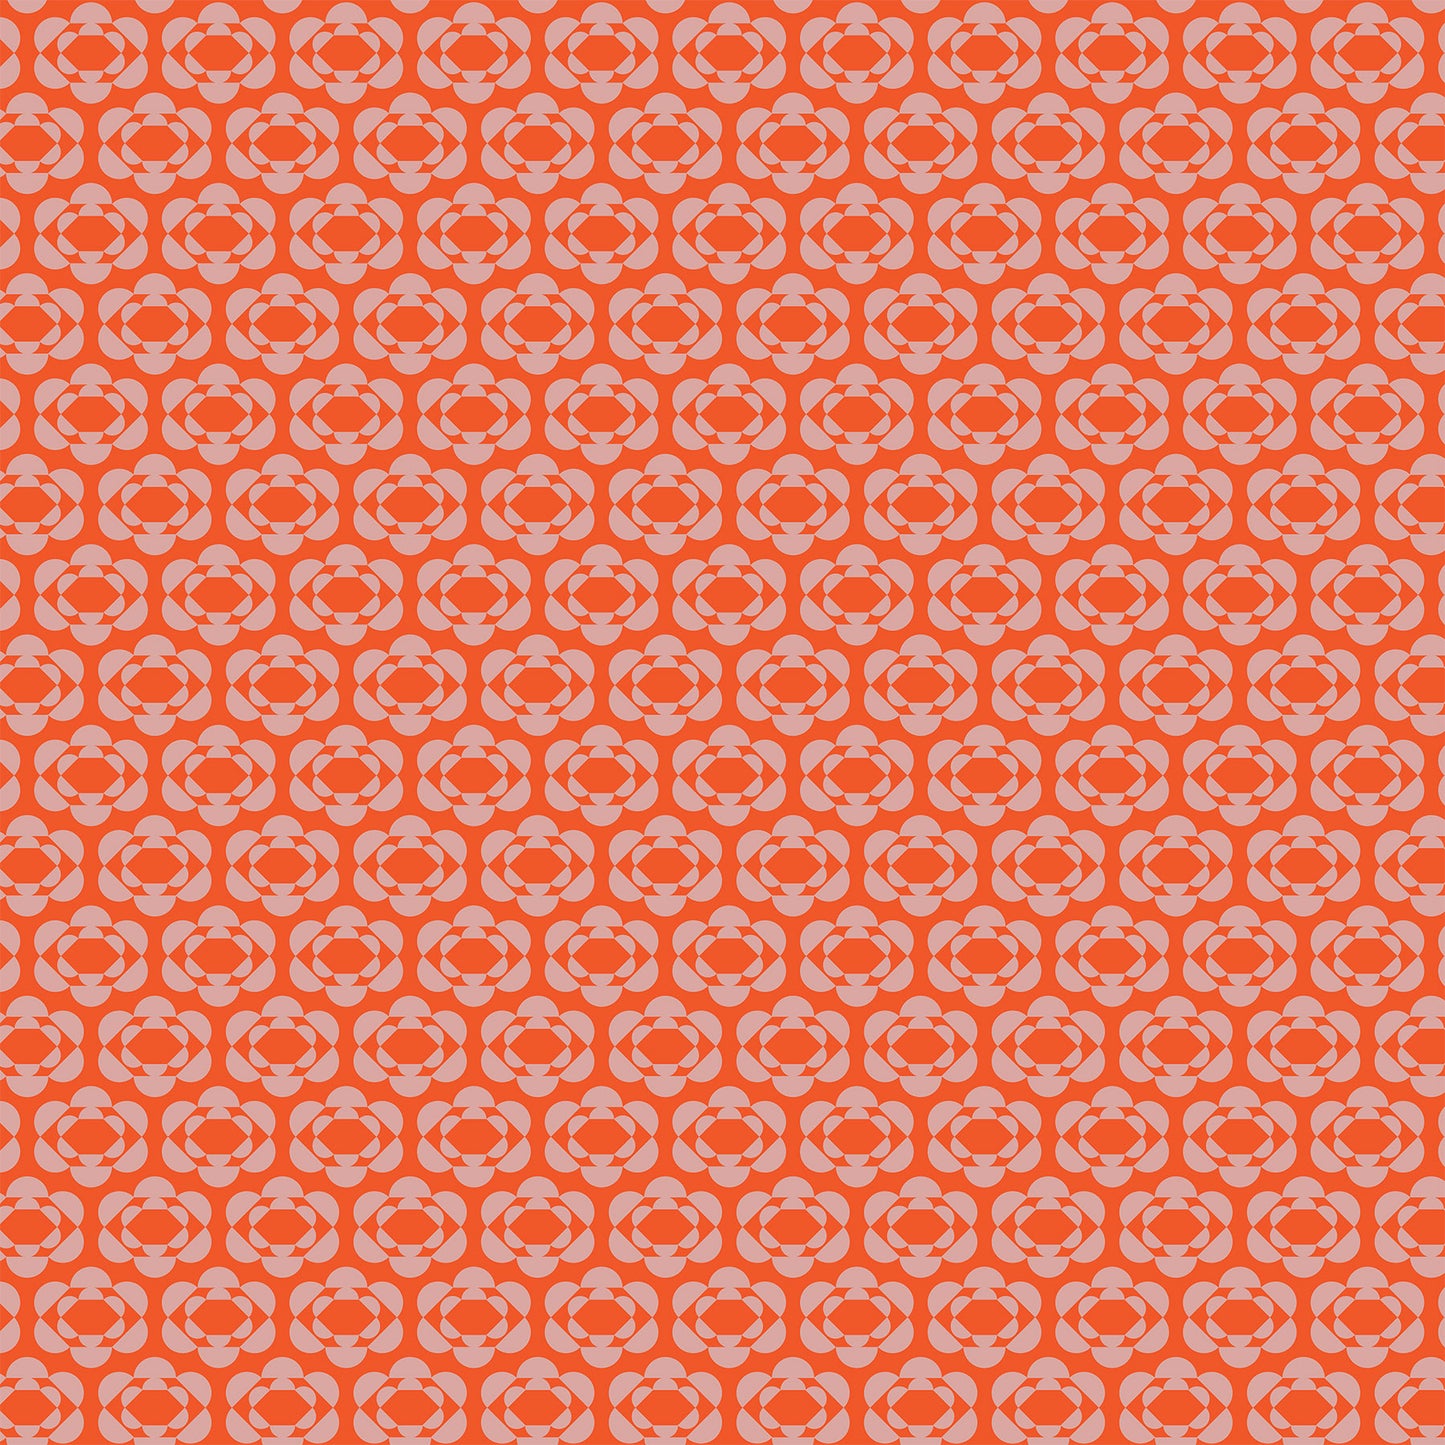 Manufacturer: Figo Fabrics Designer: Dana Willard Collection: Ghosttown Print Name: Marigold in Orange Material: 100% Cotton Weight: Quilting  SKU: 90522-56 Width: 44 inches